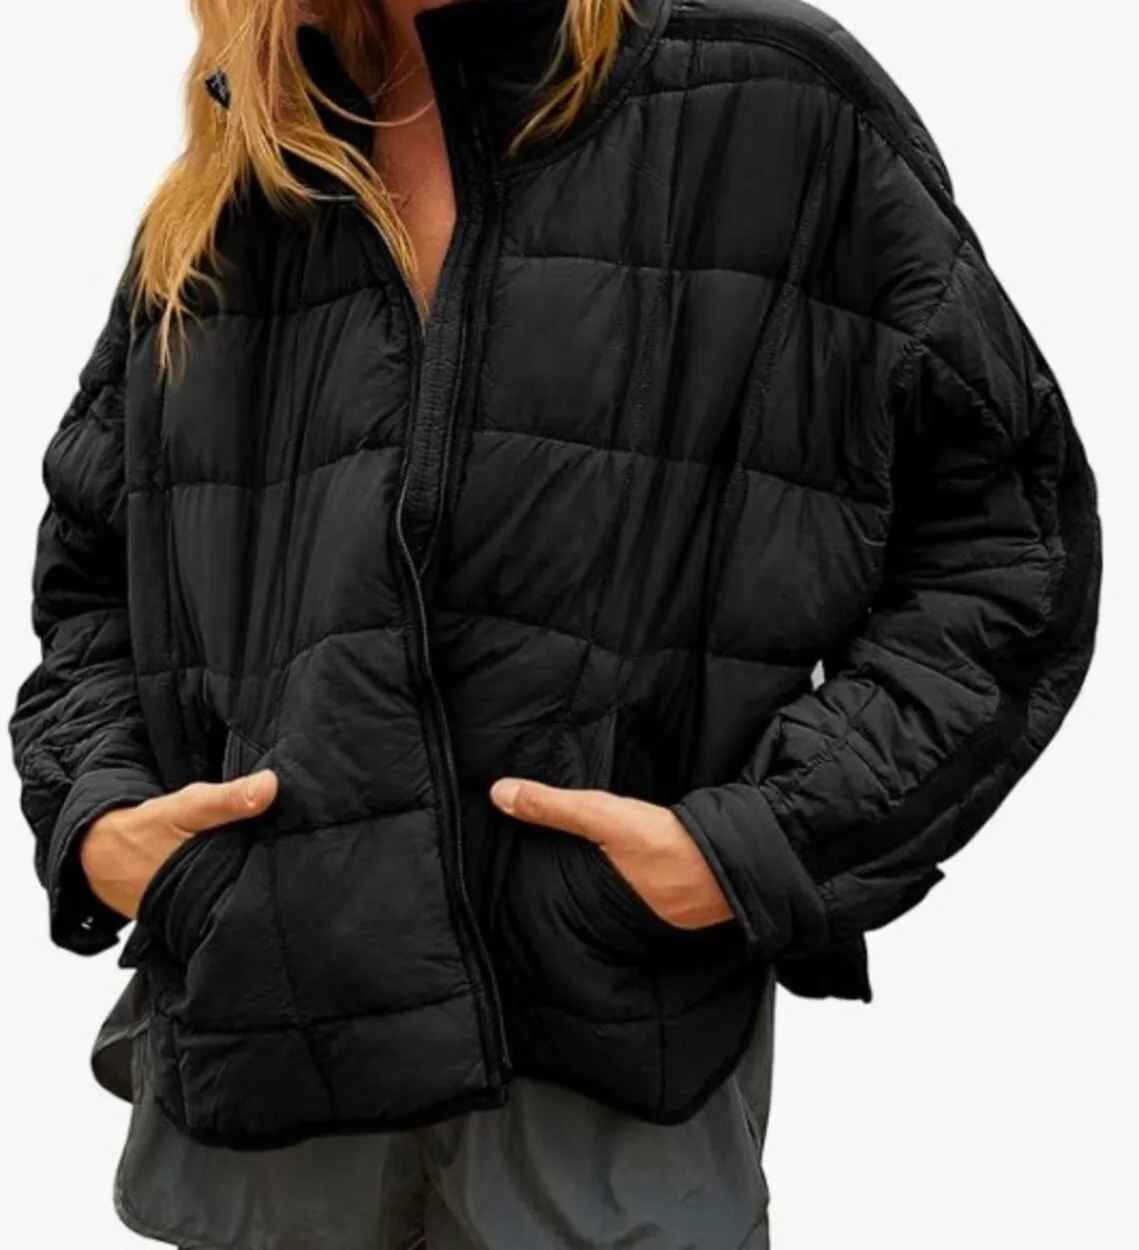 A woman wearing a black puffer jacket